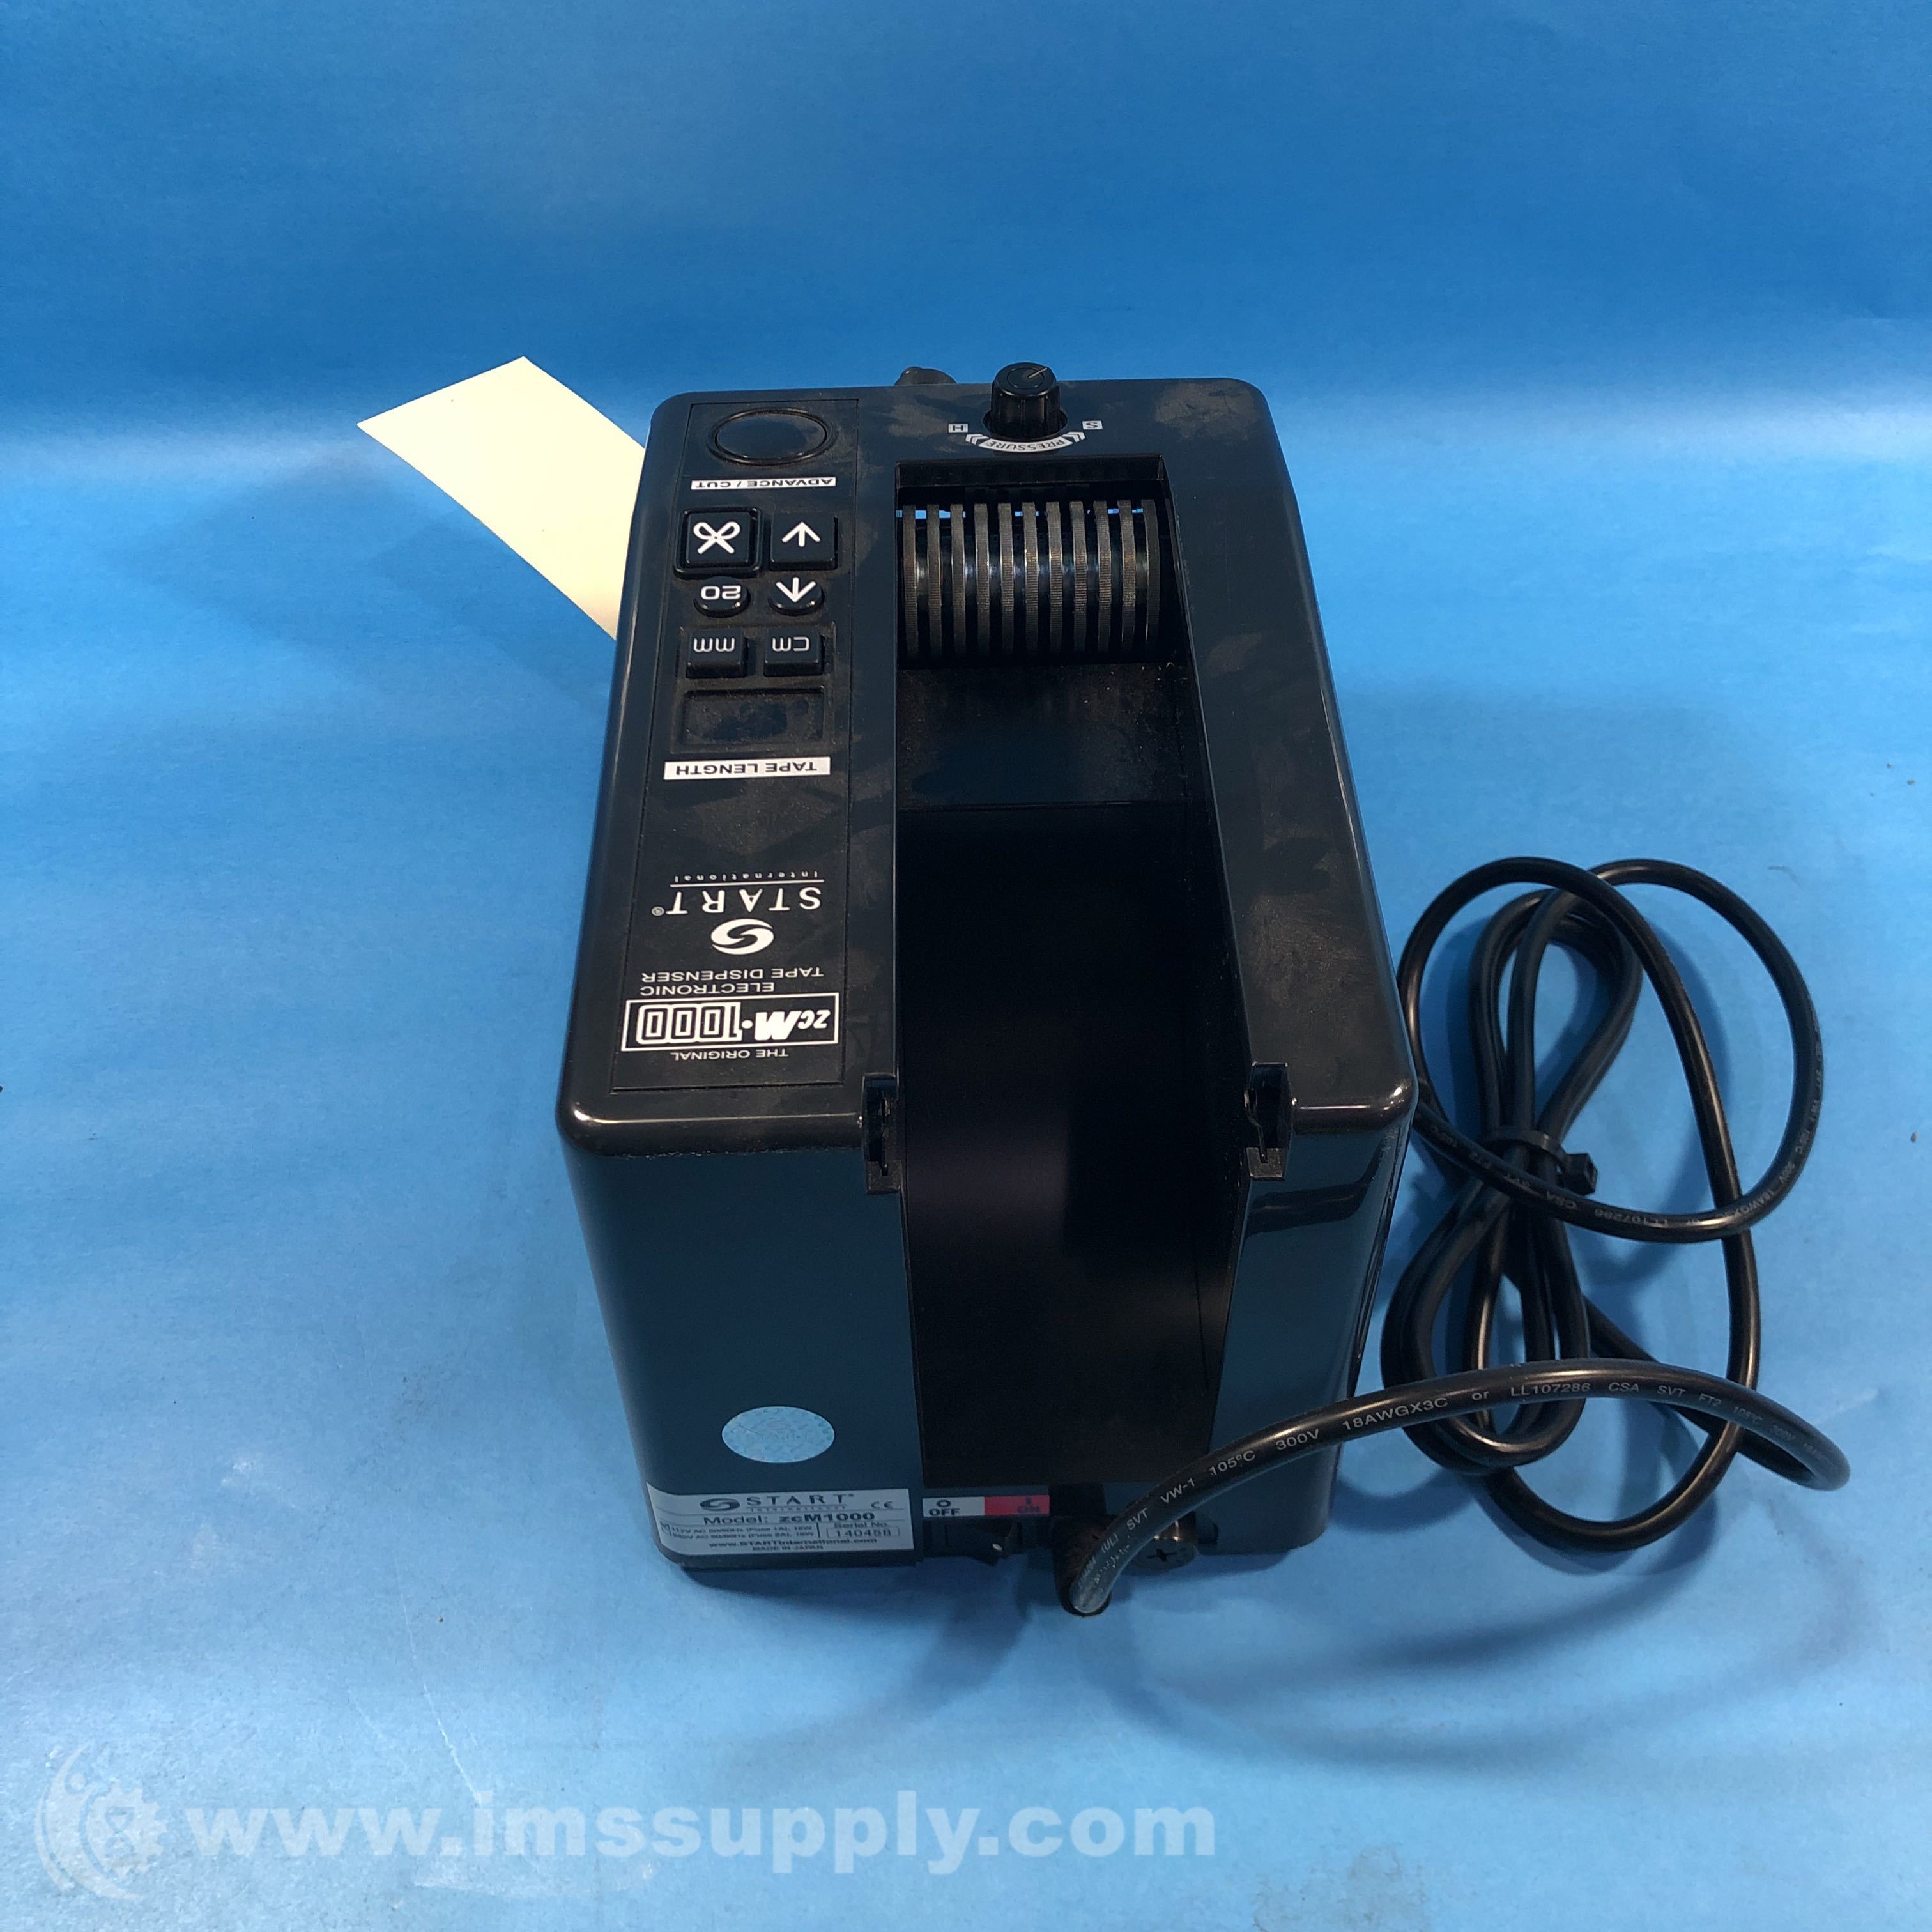 Start International ZCM1000 ELECTRIC / Automatic Tape Dispenser